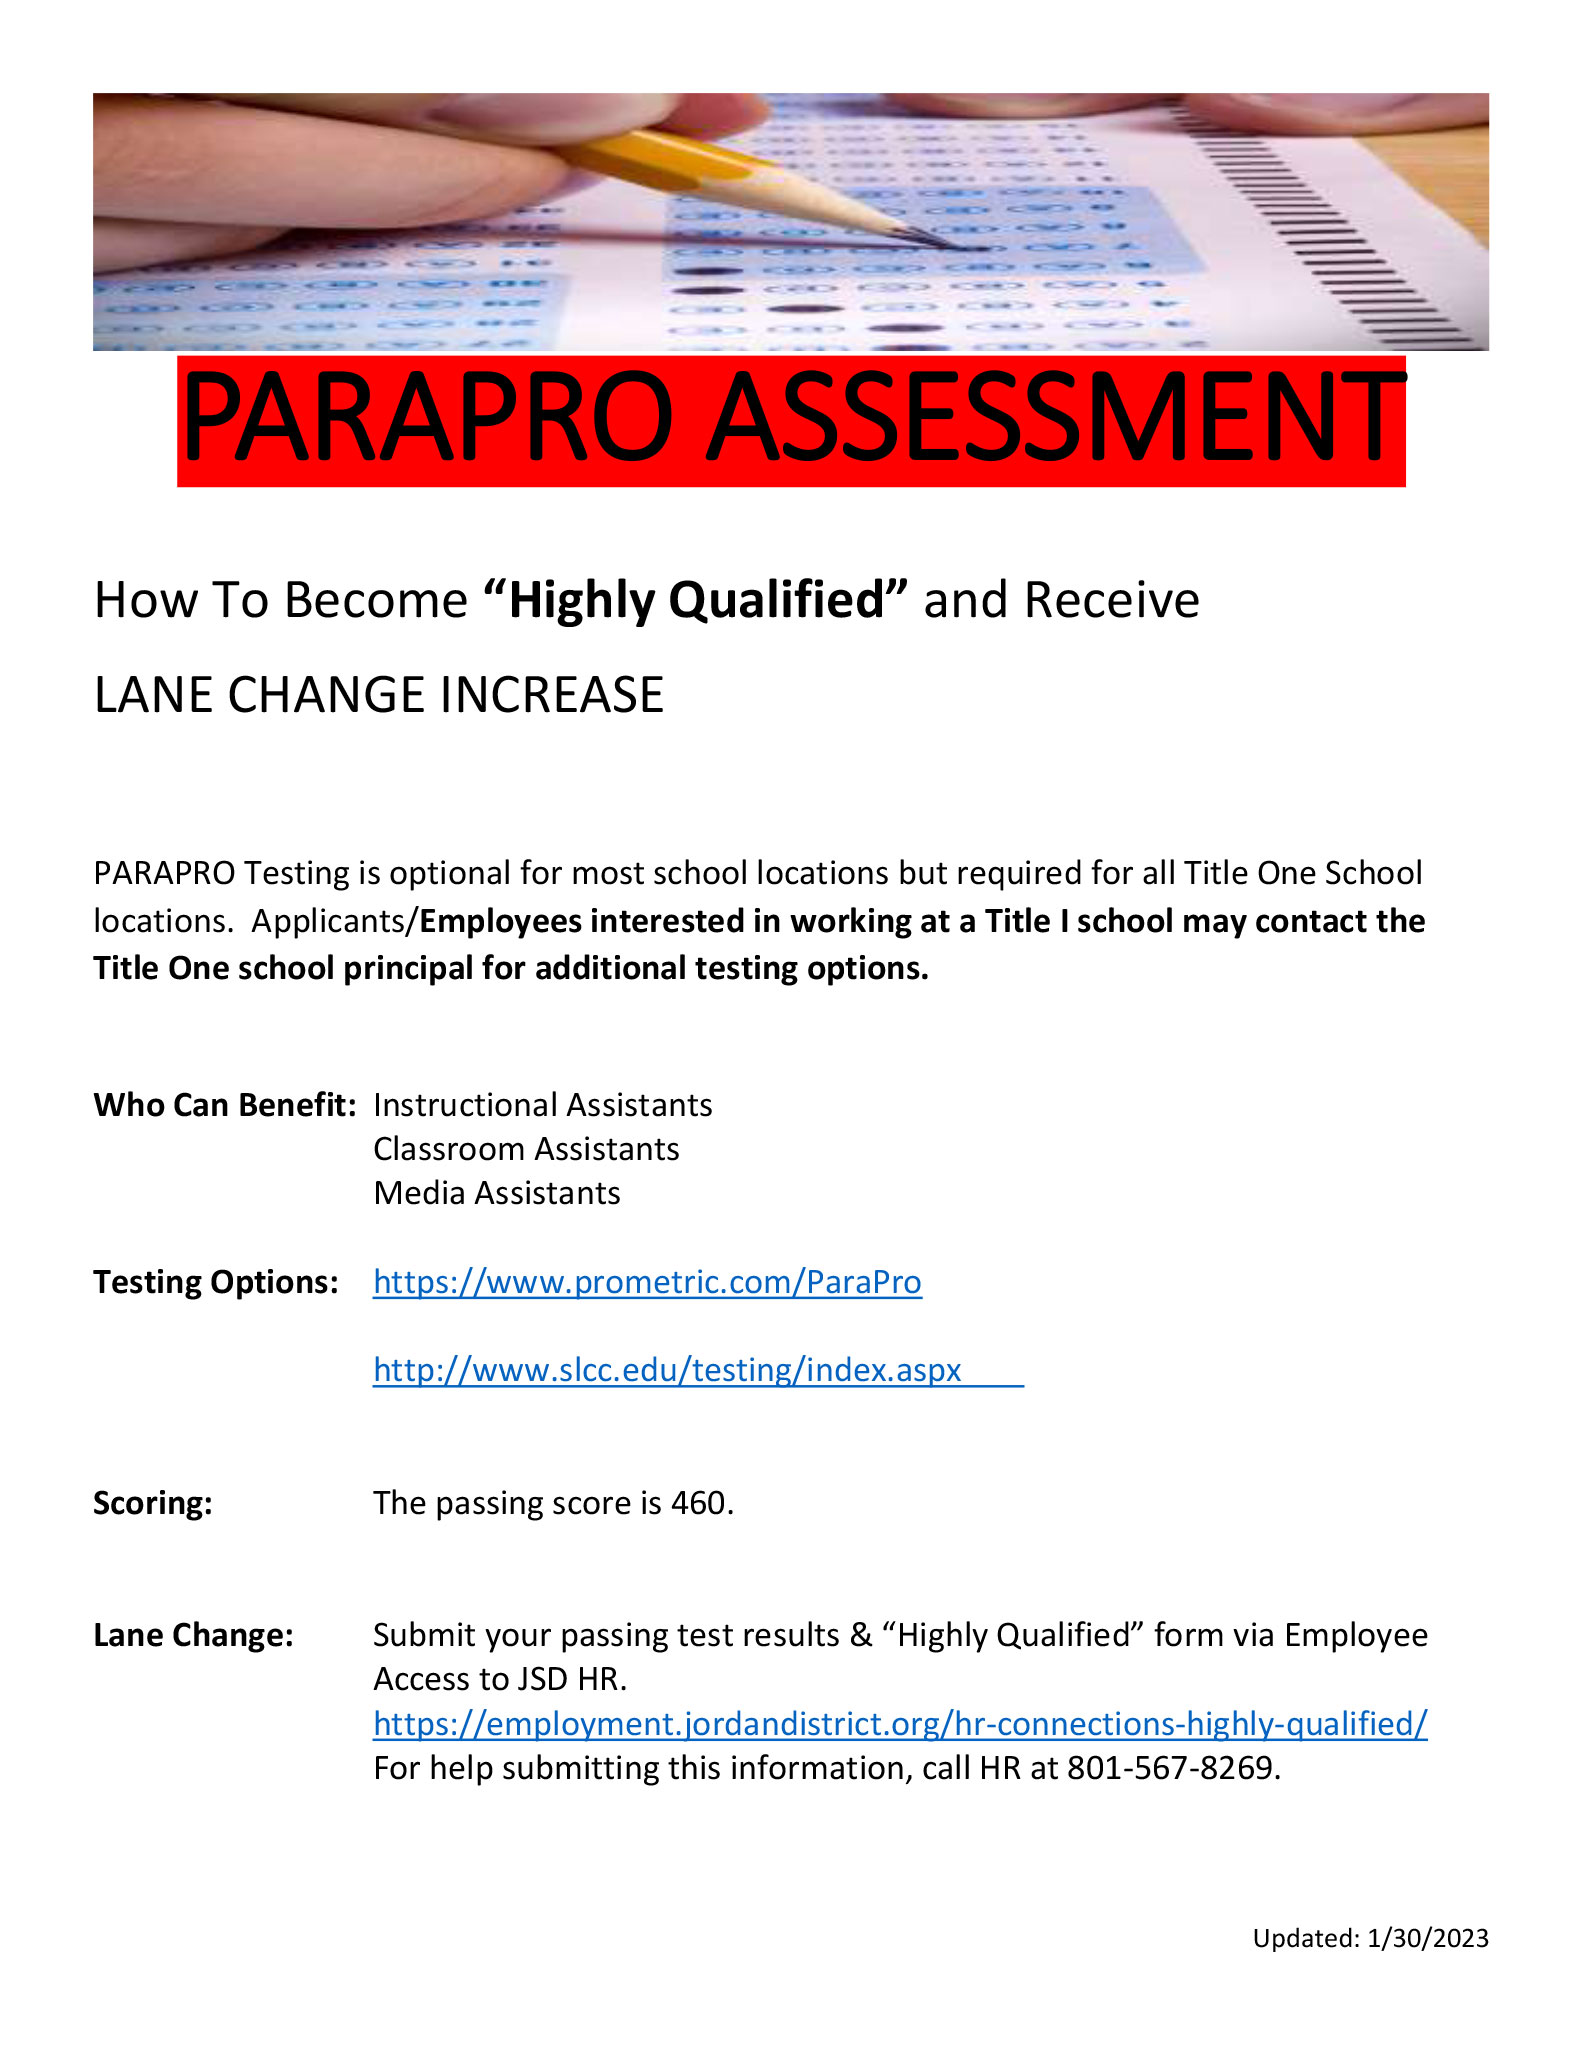 ParaPro Assessment Flyer